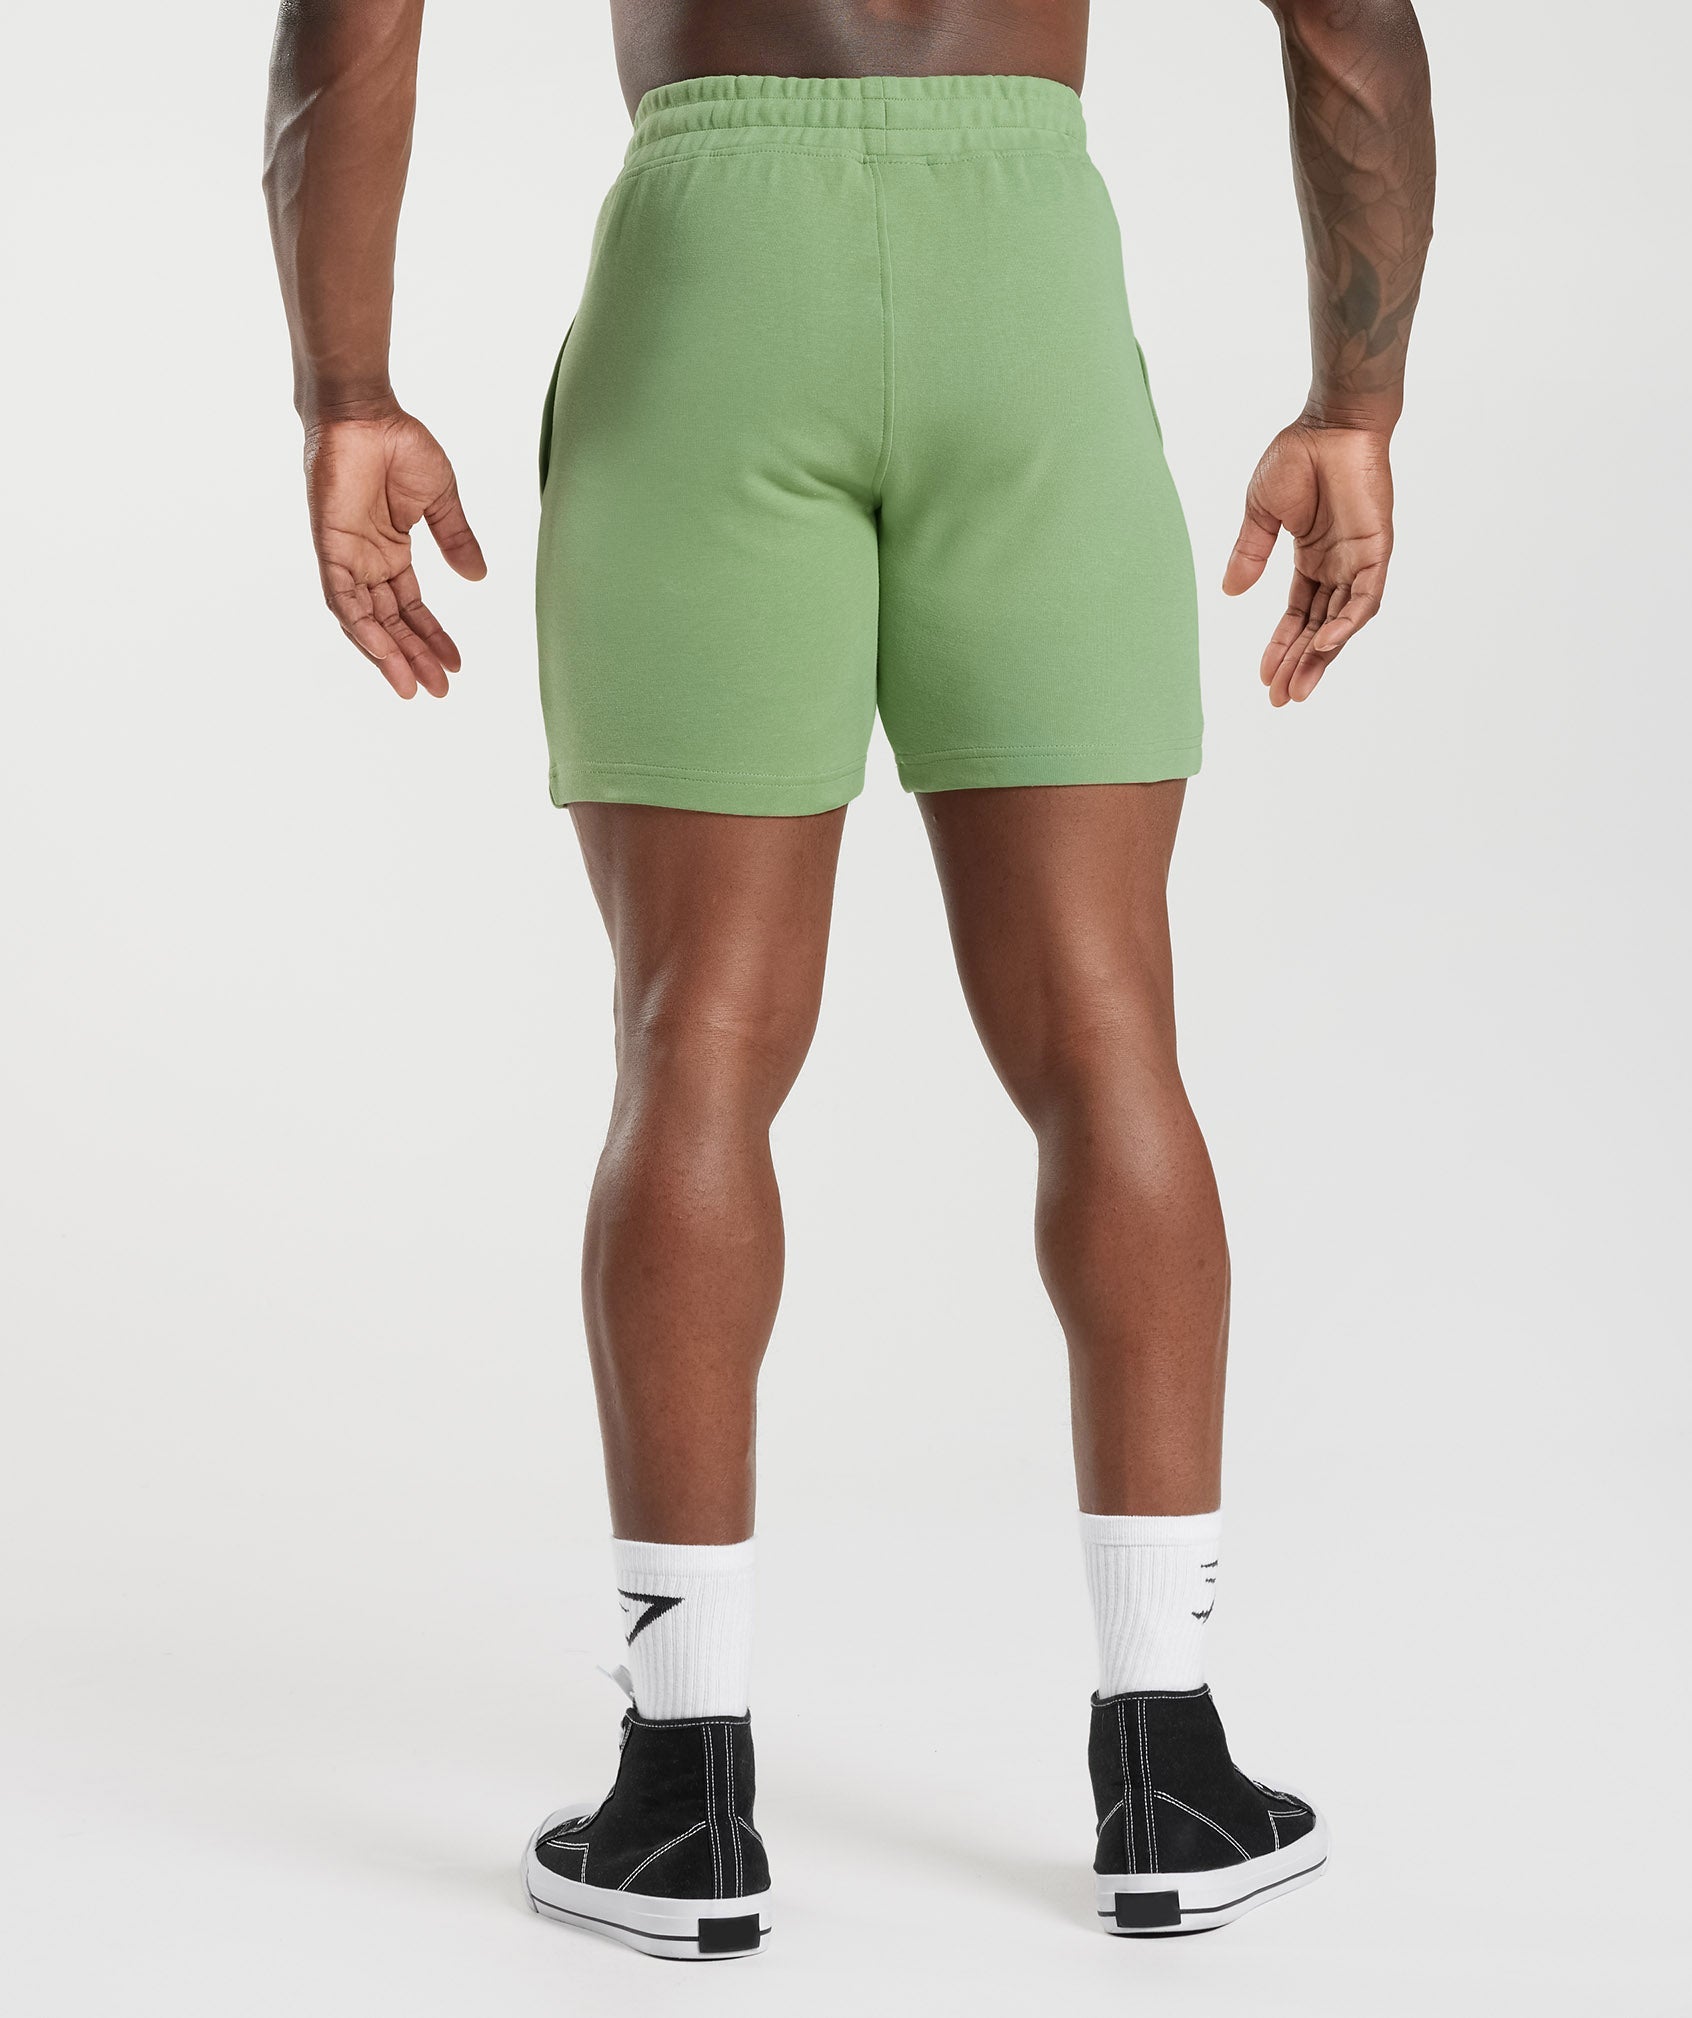 React 7" Shorts in Tea Green